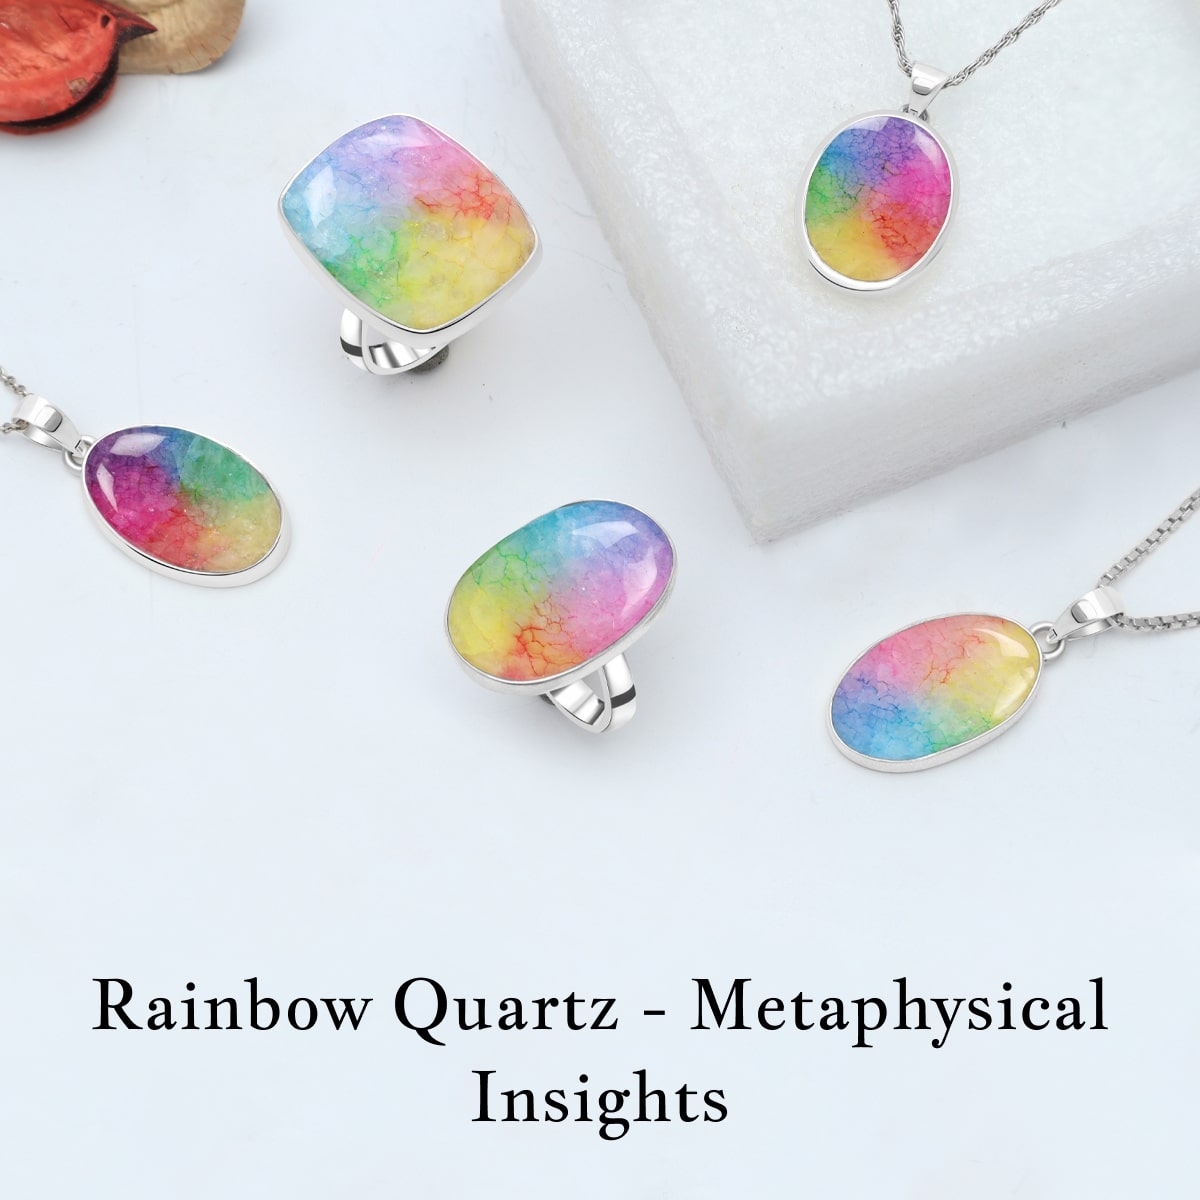 Metaphysical Properties of Rainbow Quartz